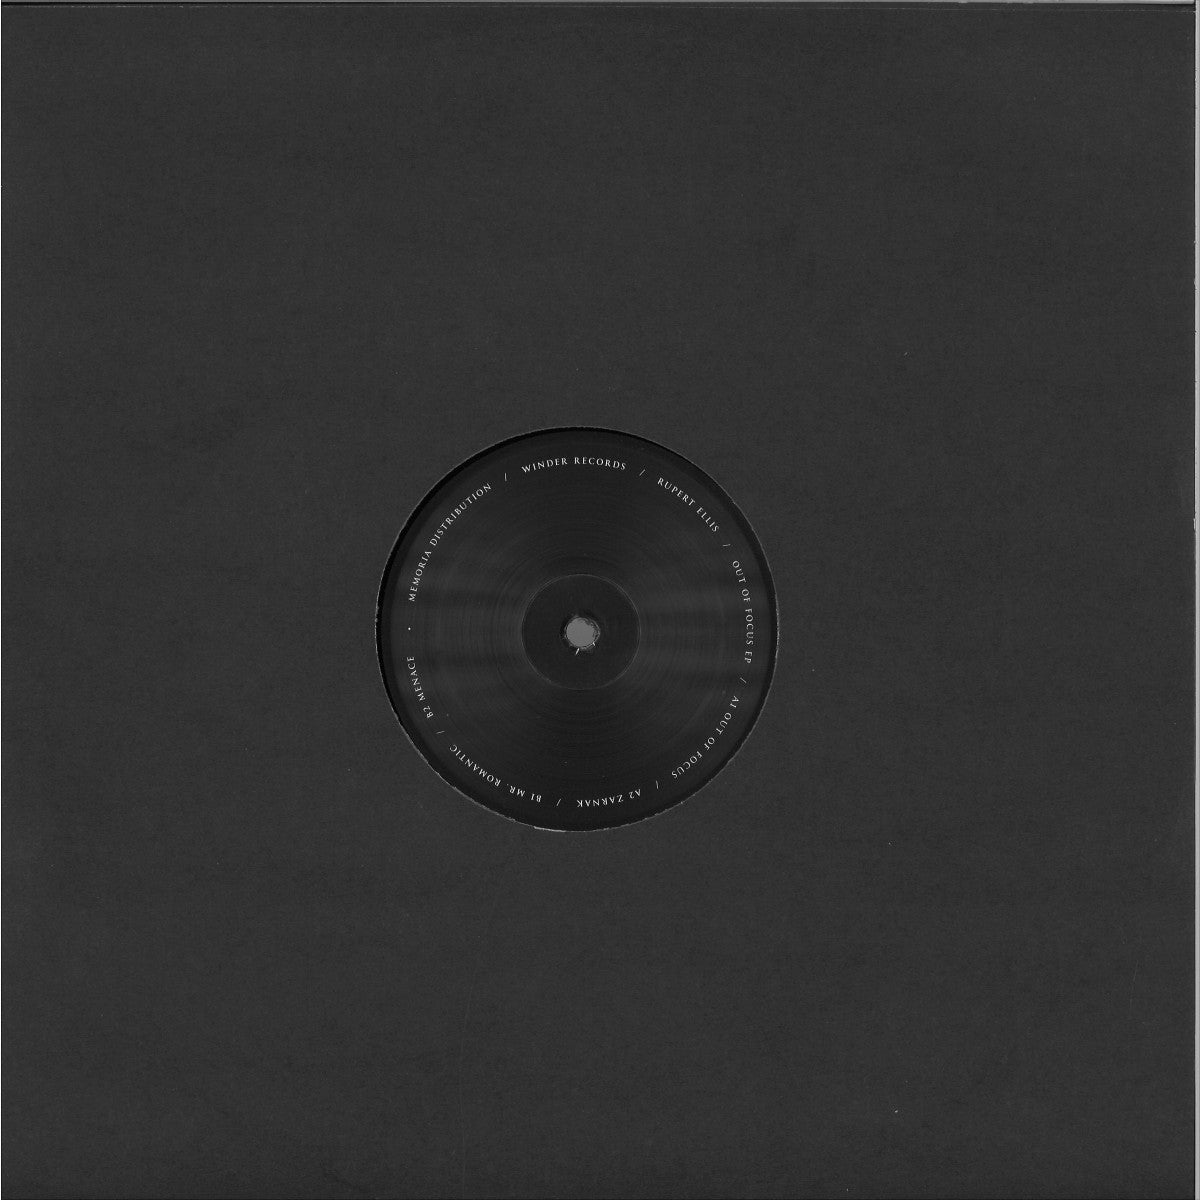 Rupert Ellis - Out Of Focus EP (Winder Records) (M)